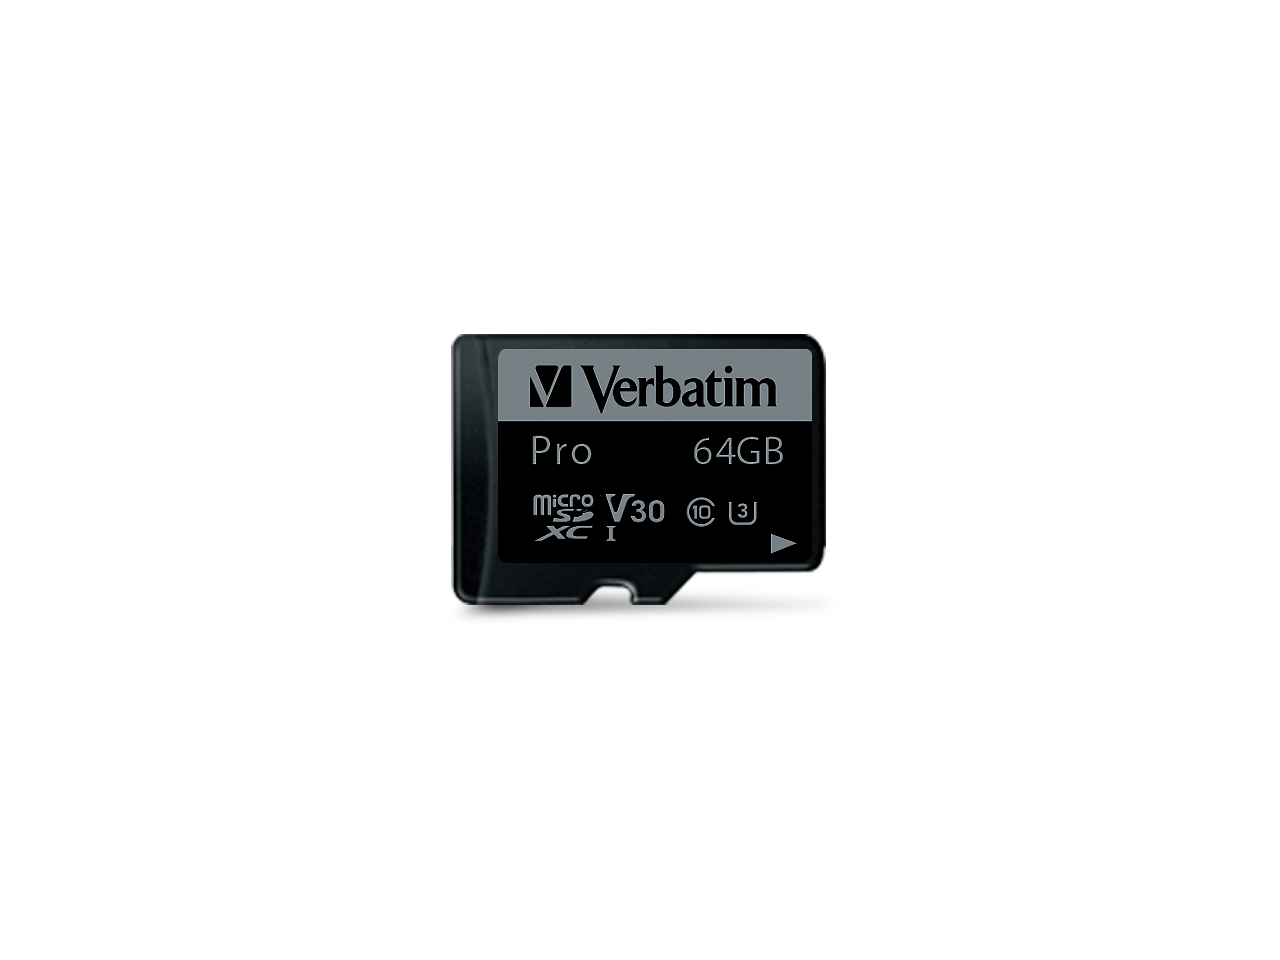 VERBATIM PRO U3 MICRO SDHC KARTE 64GB 47042 Klasse 10 mit Adapter 1